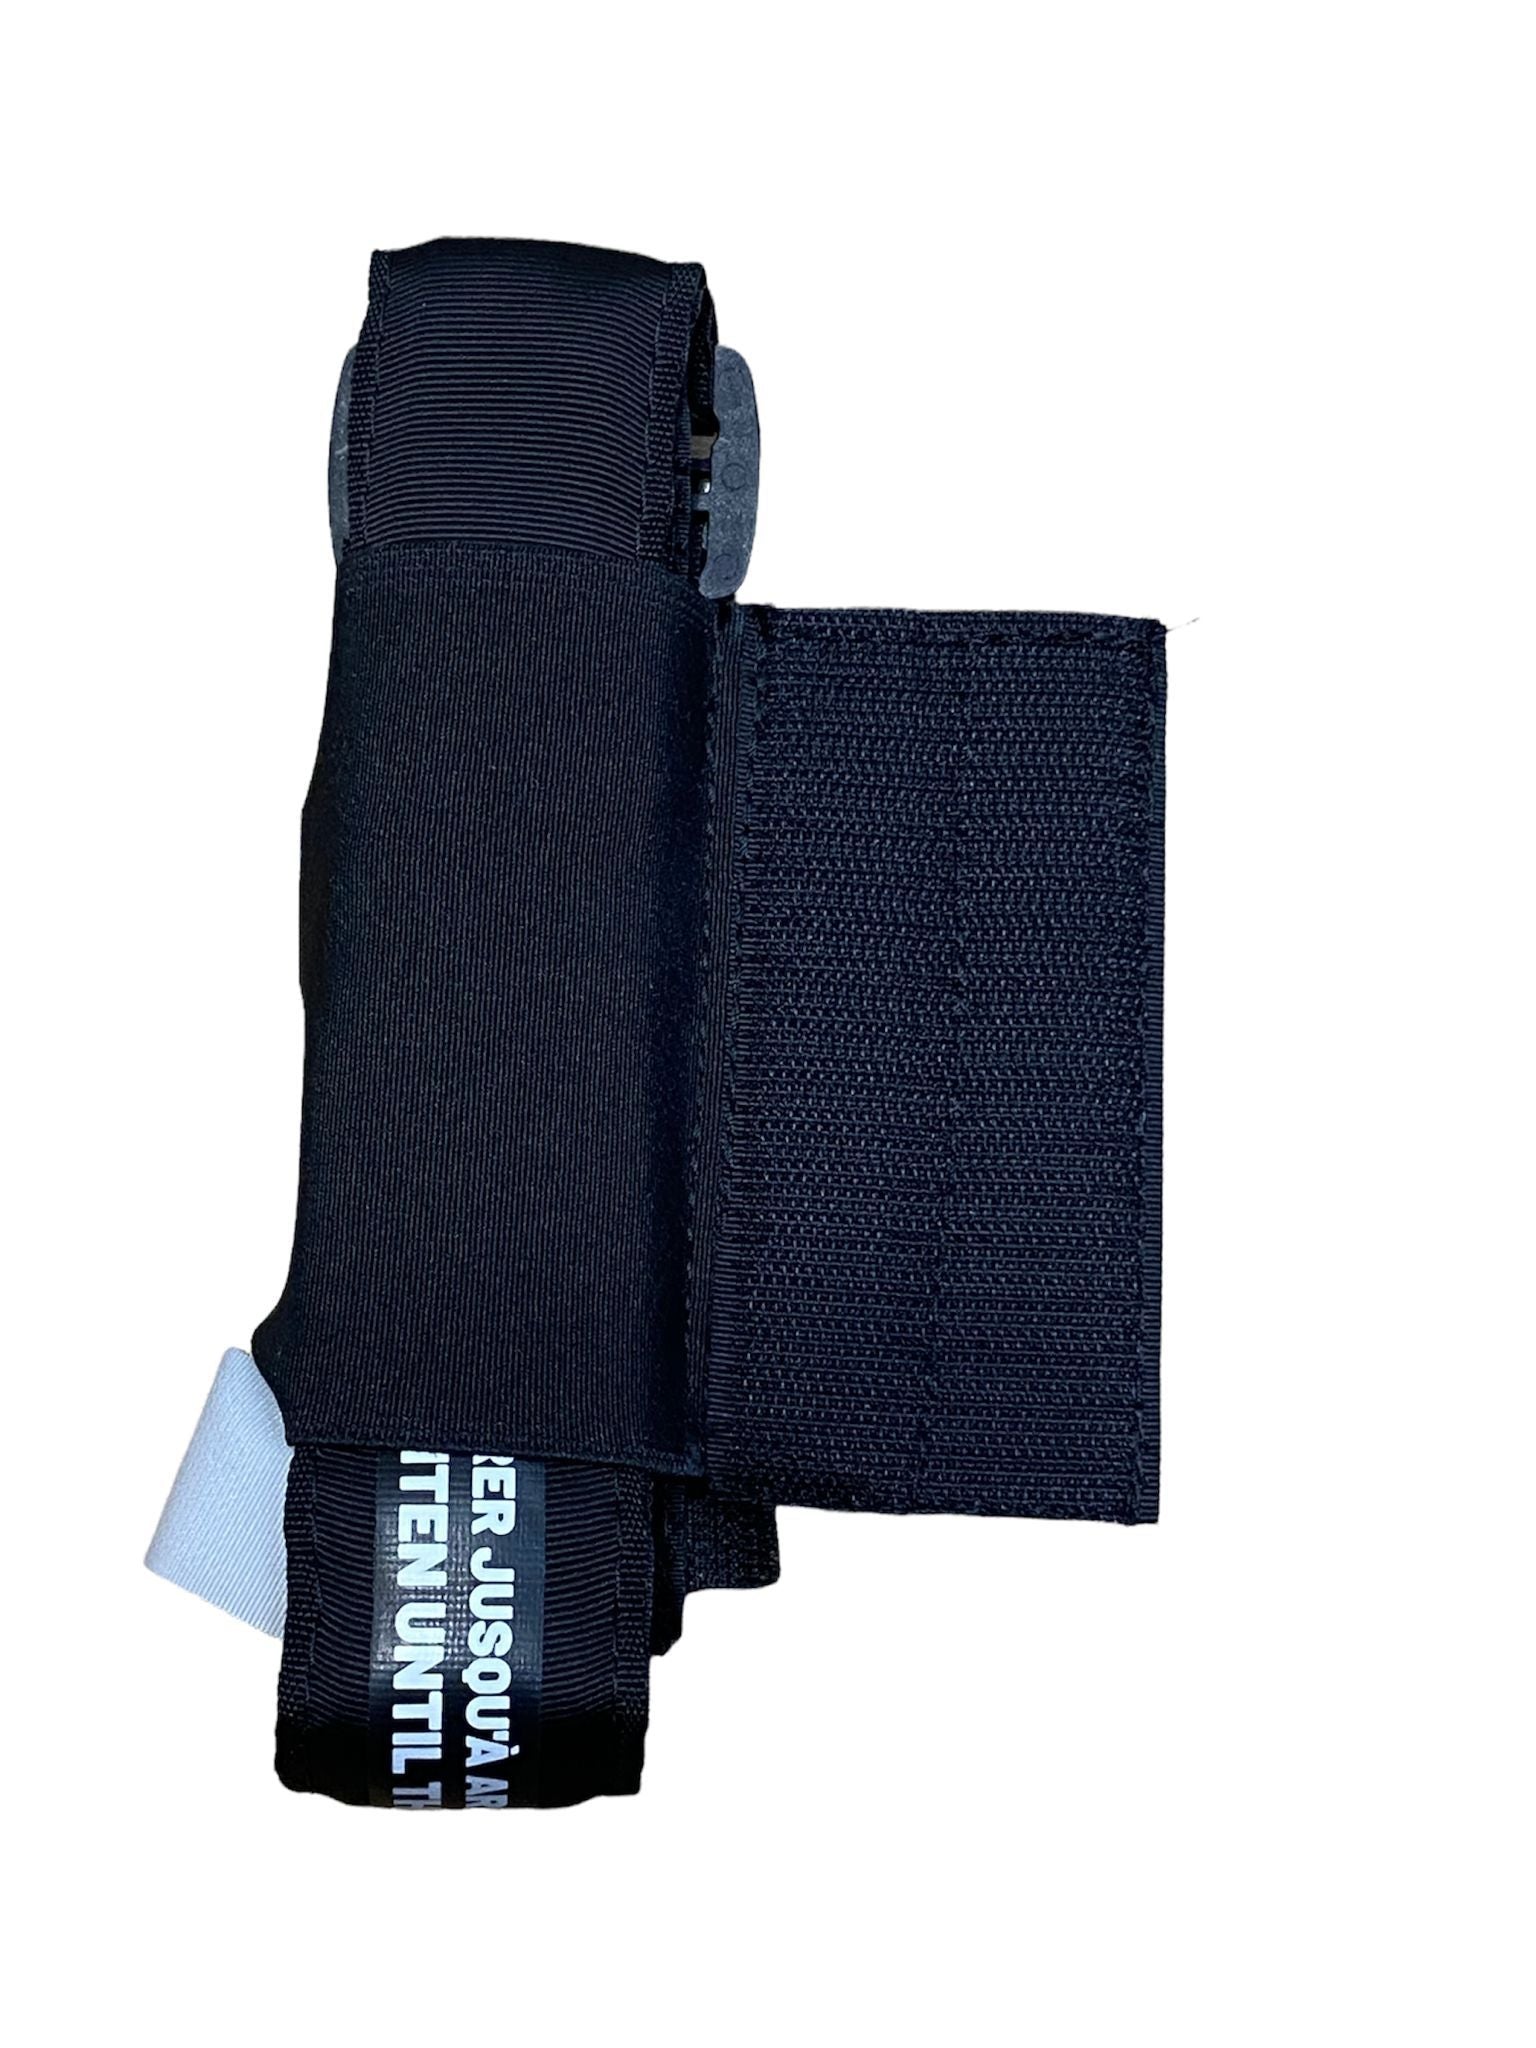 Porta Tourniquet Velcrato Elastico - Black